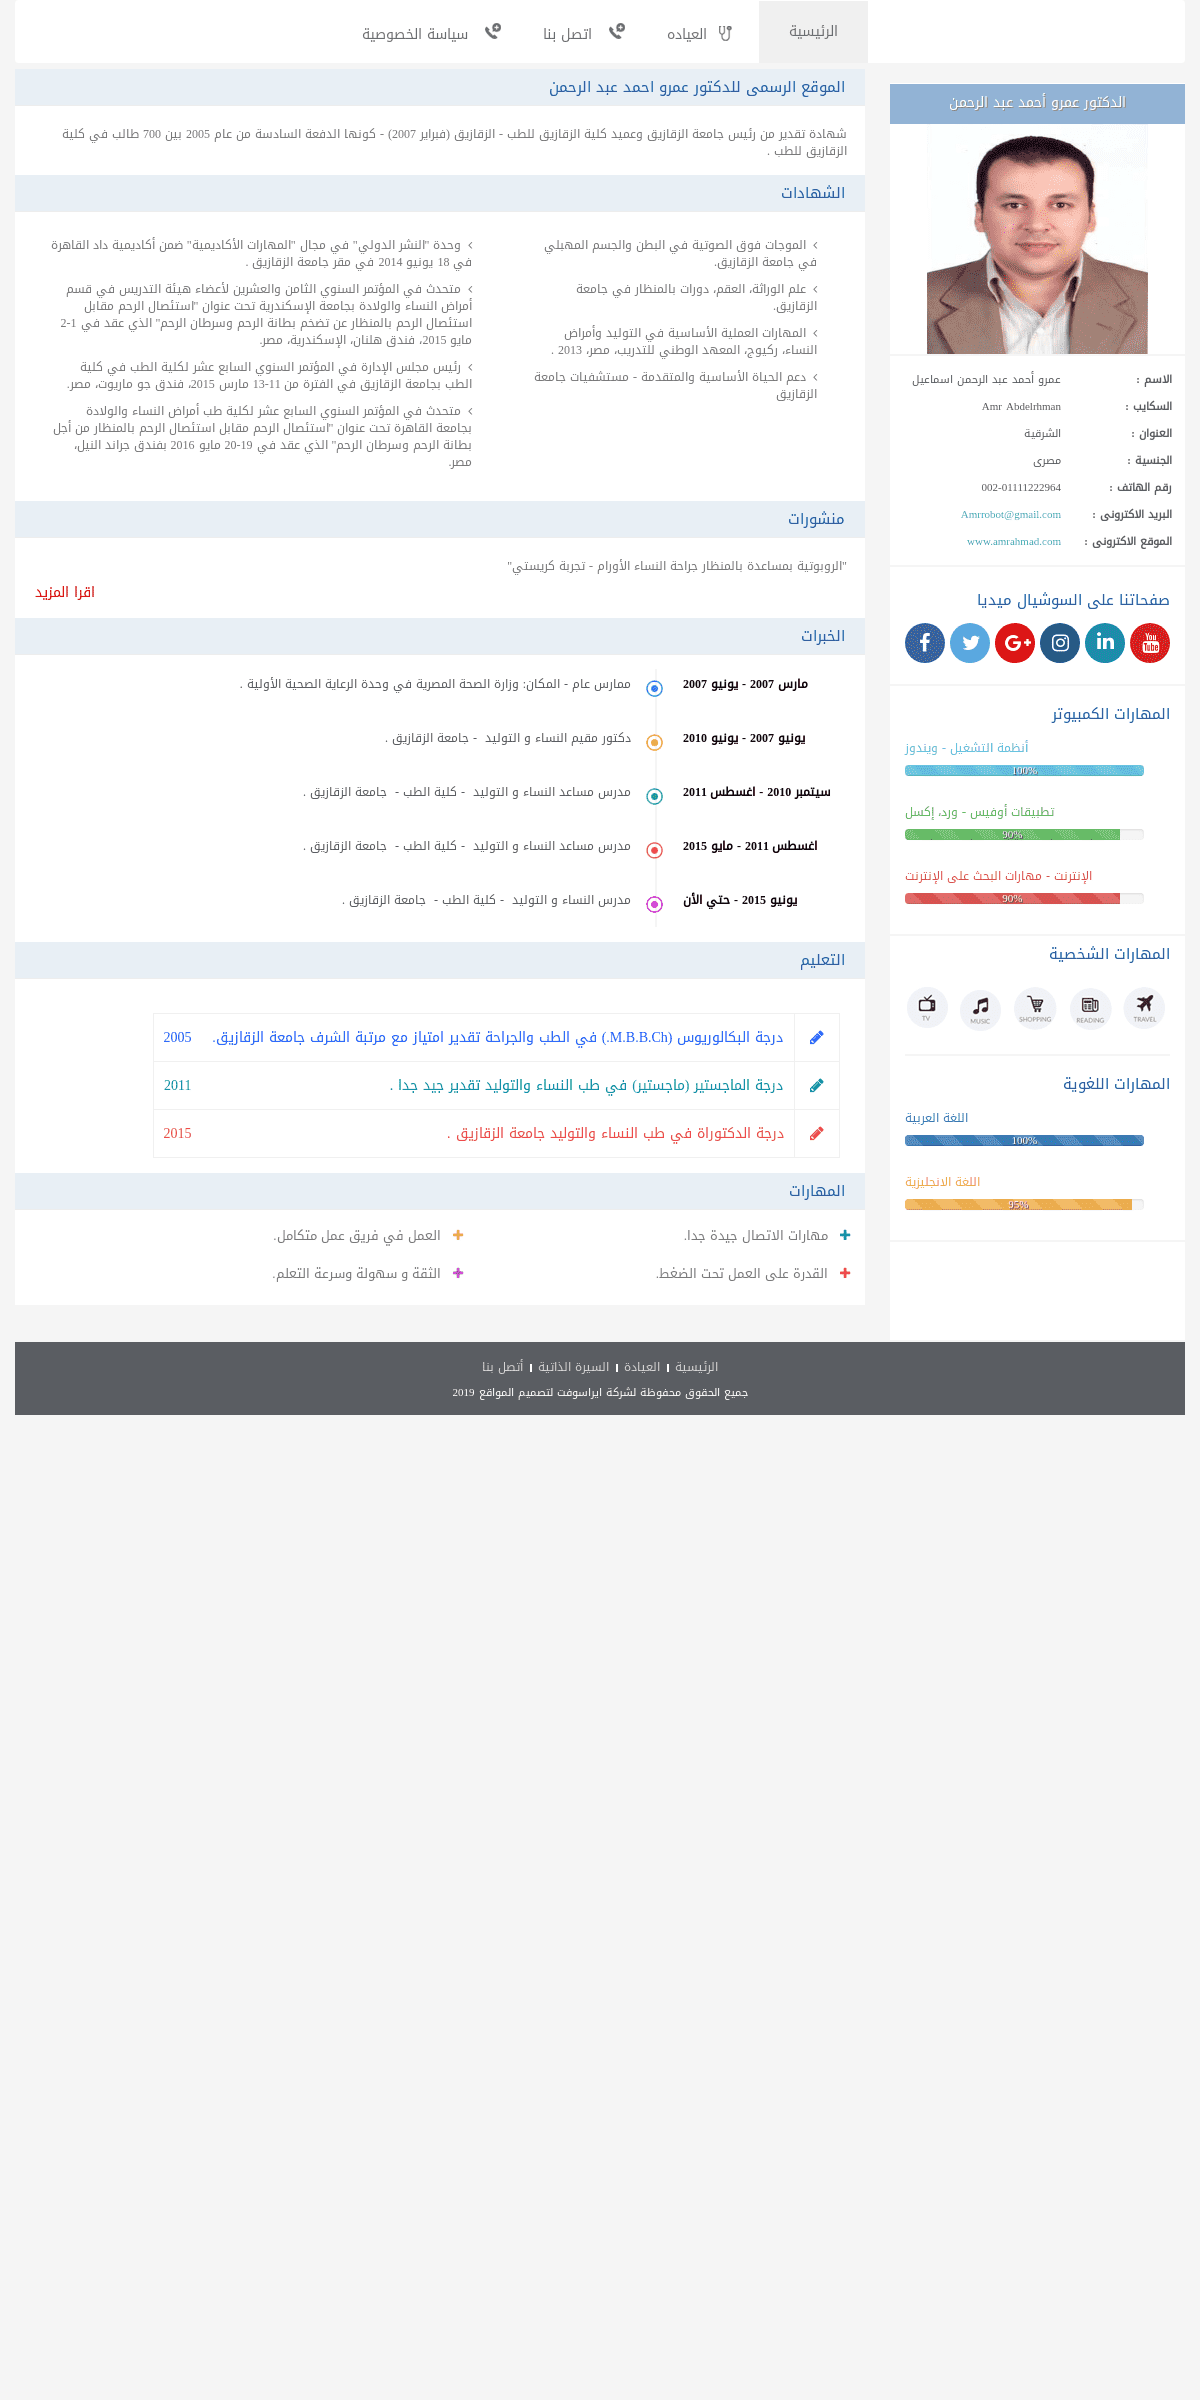 A complete backup of amrahmad.com